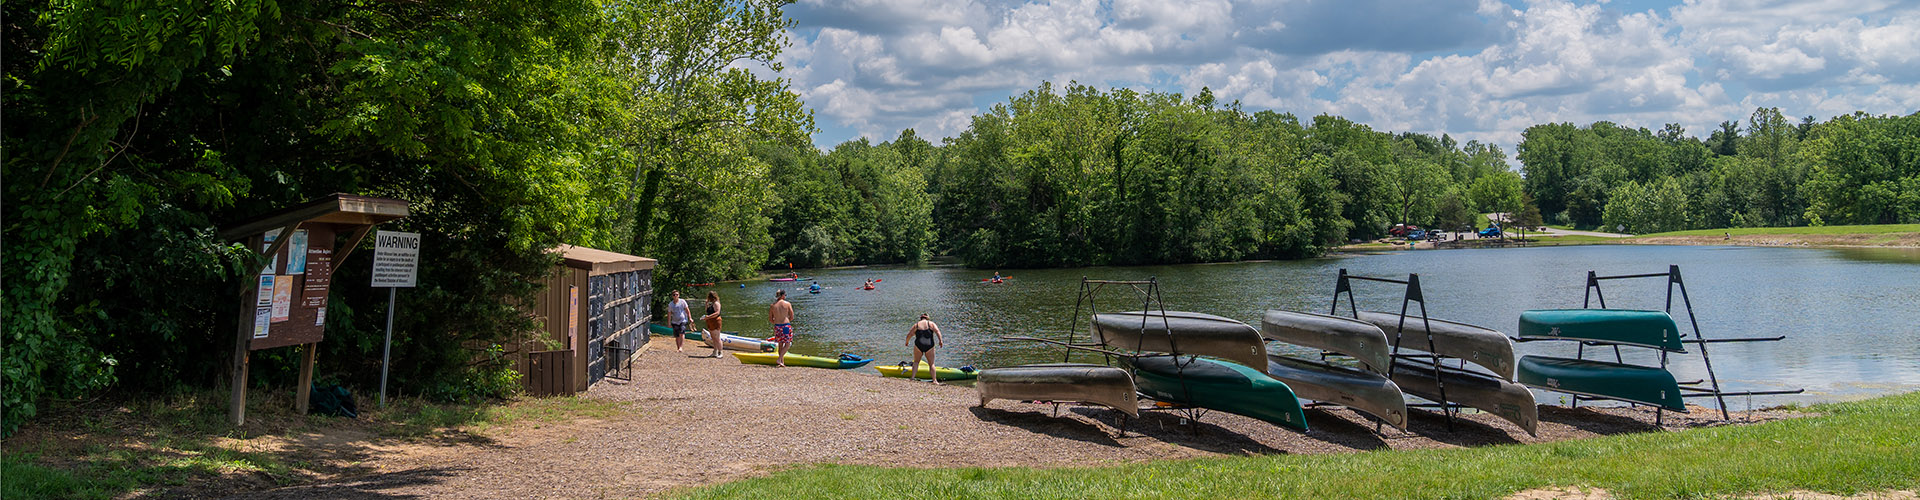 Three canoe racks holding empty canoes on the banks of a Missouri river